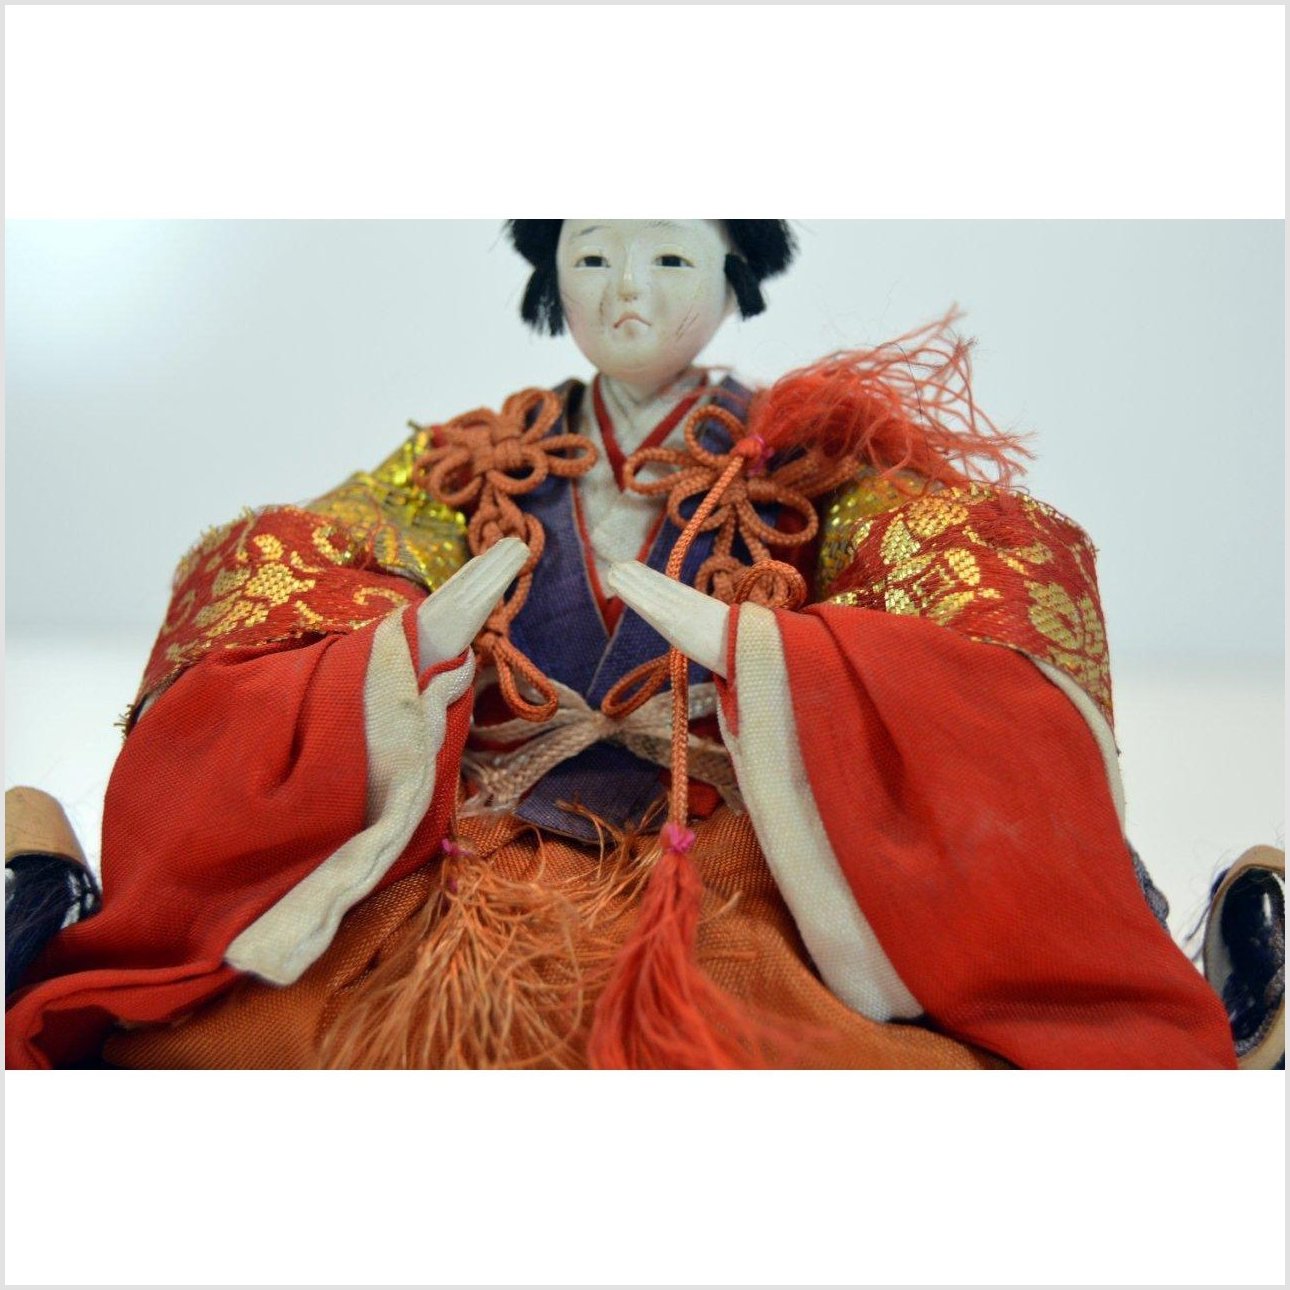 Japanese Doll, Kyoto made